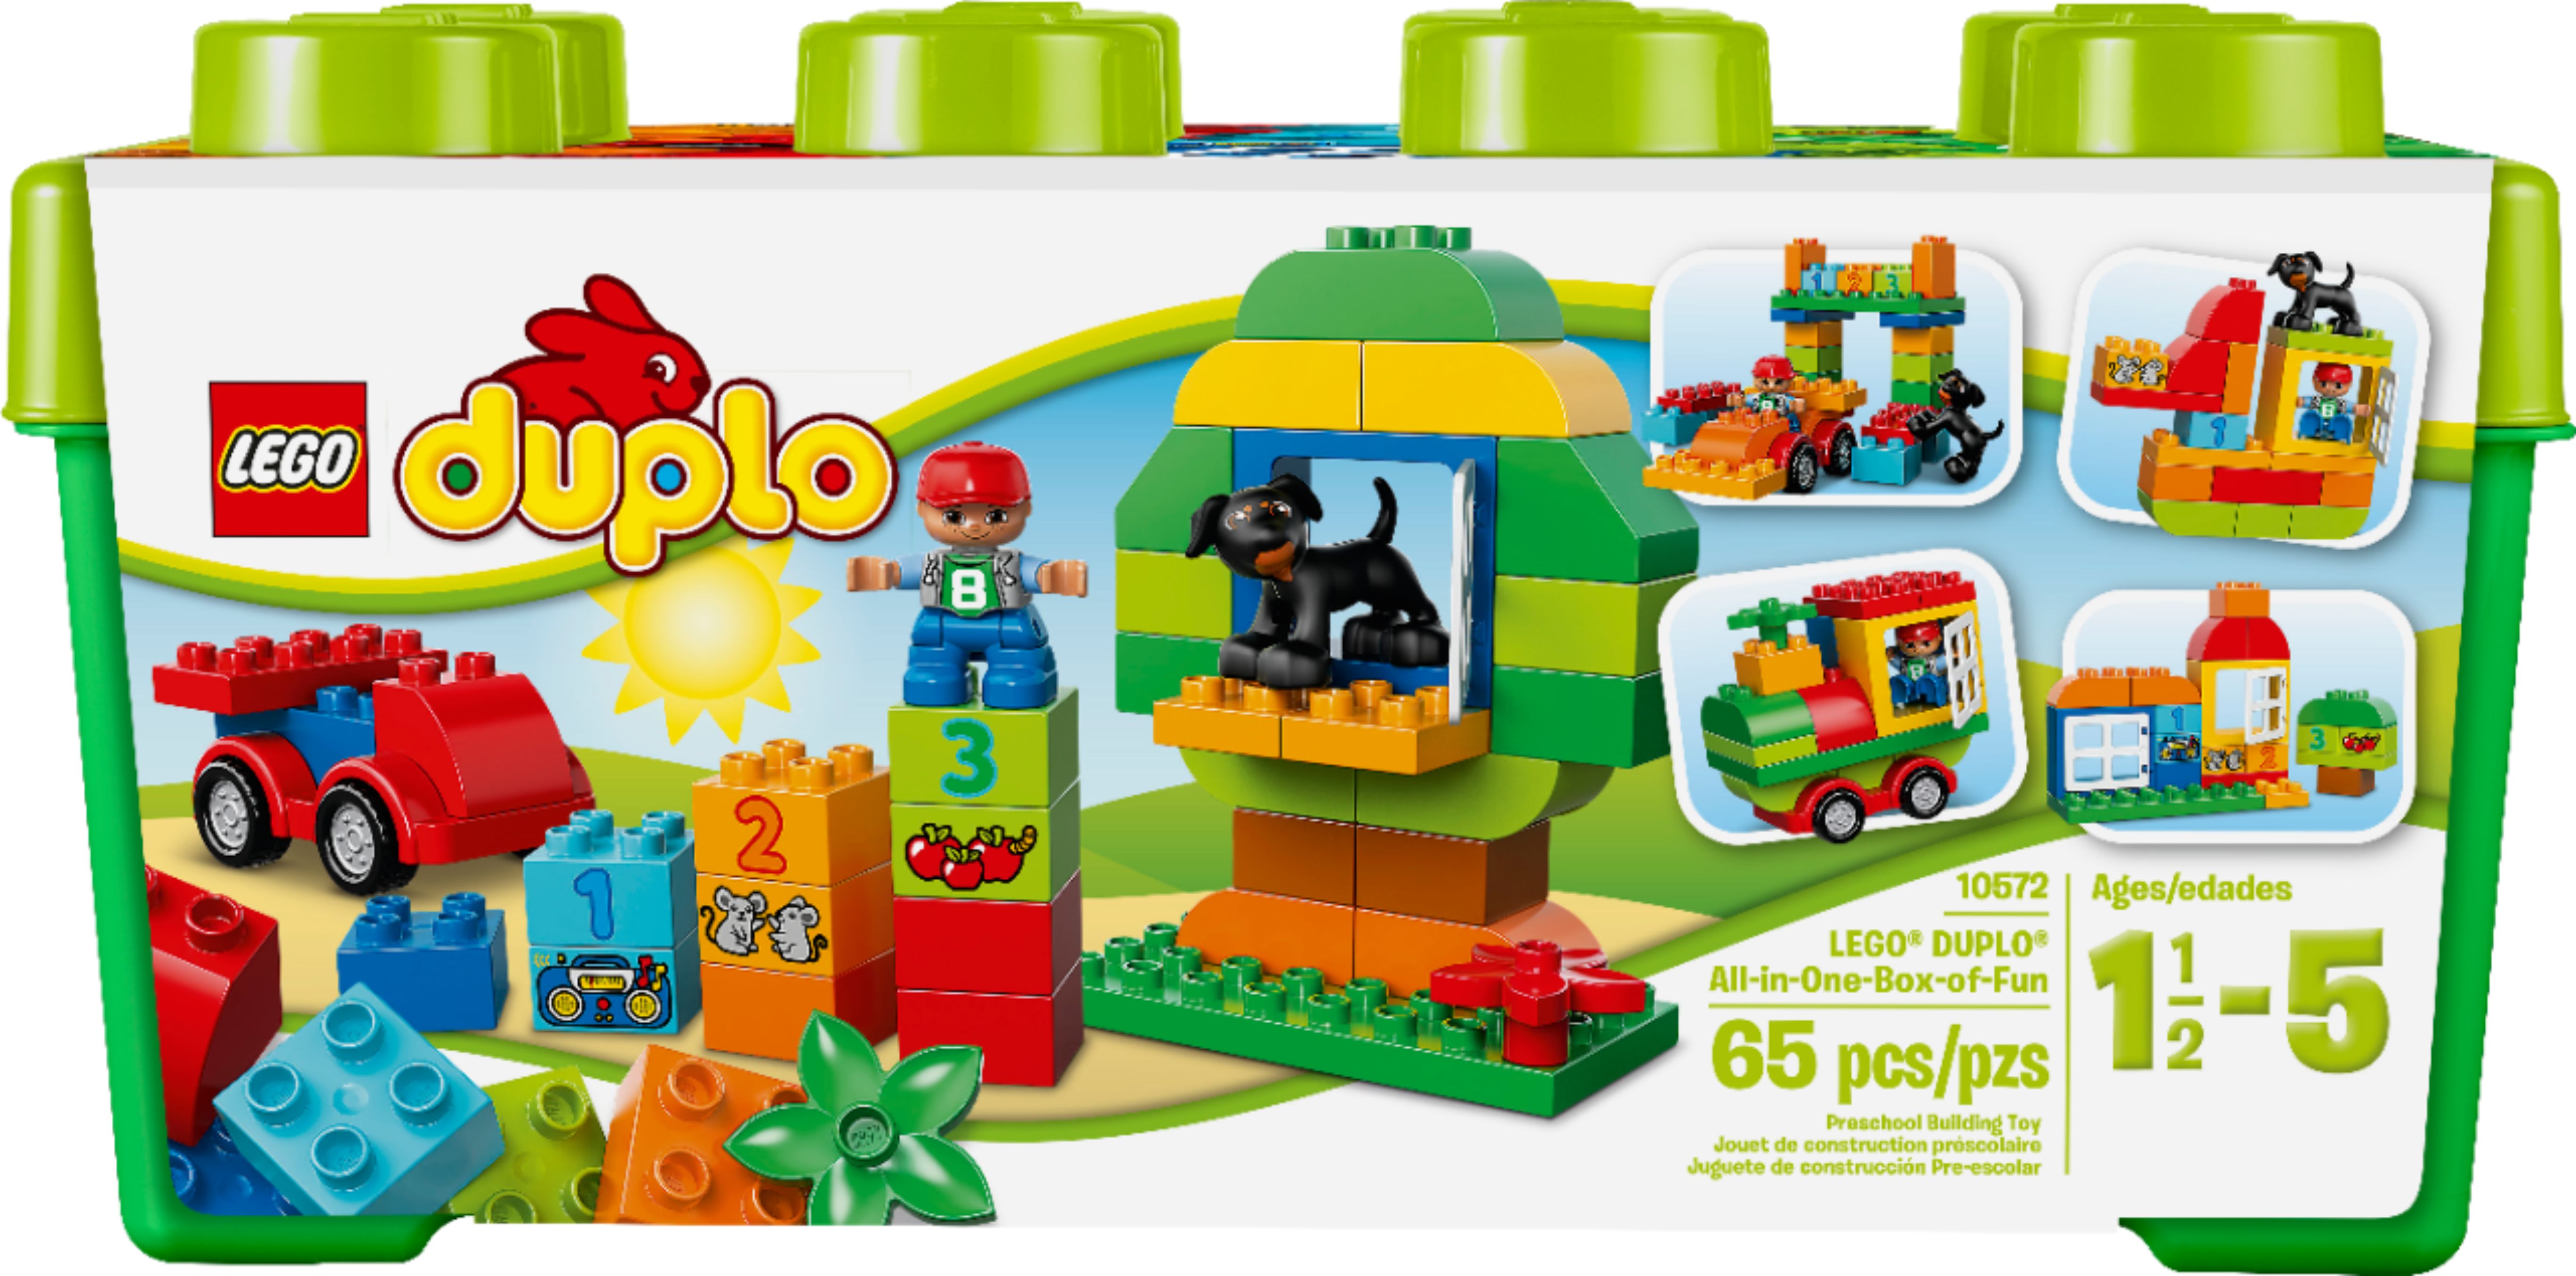 LEGO DUPLO All-in-One-Box-of-Fun 10572 